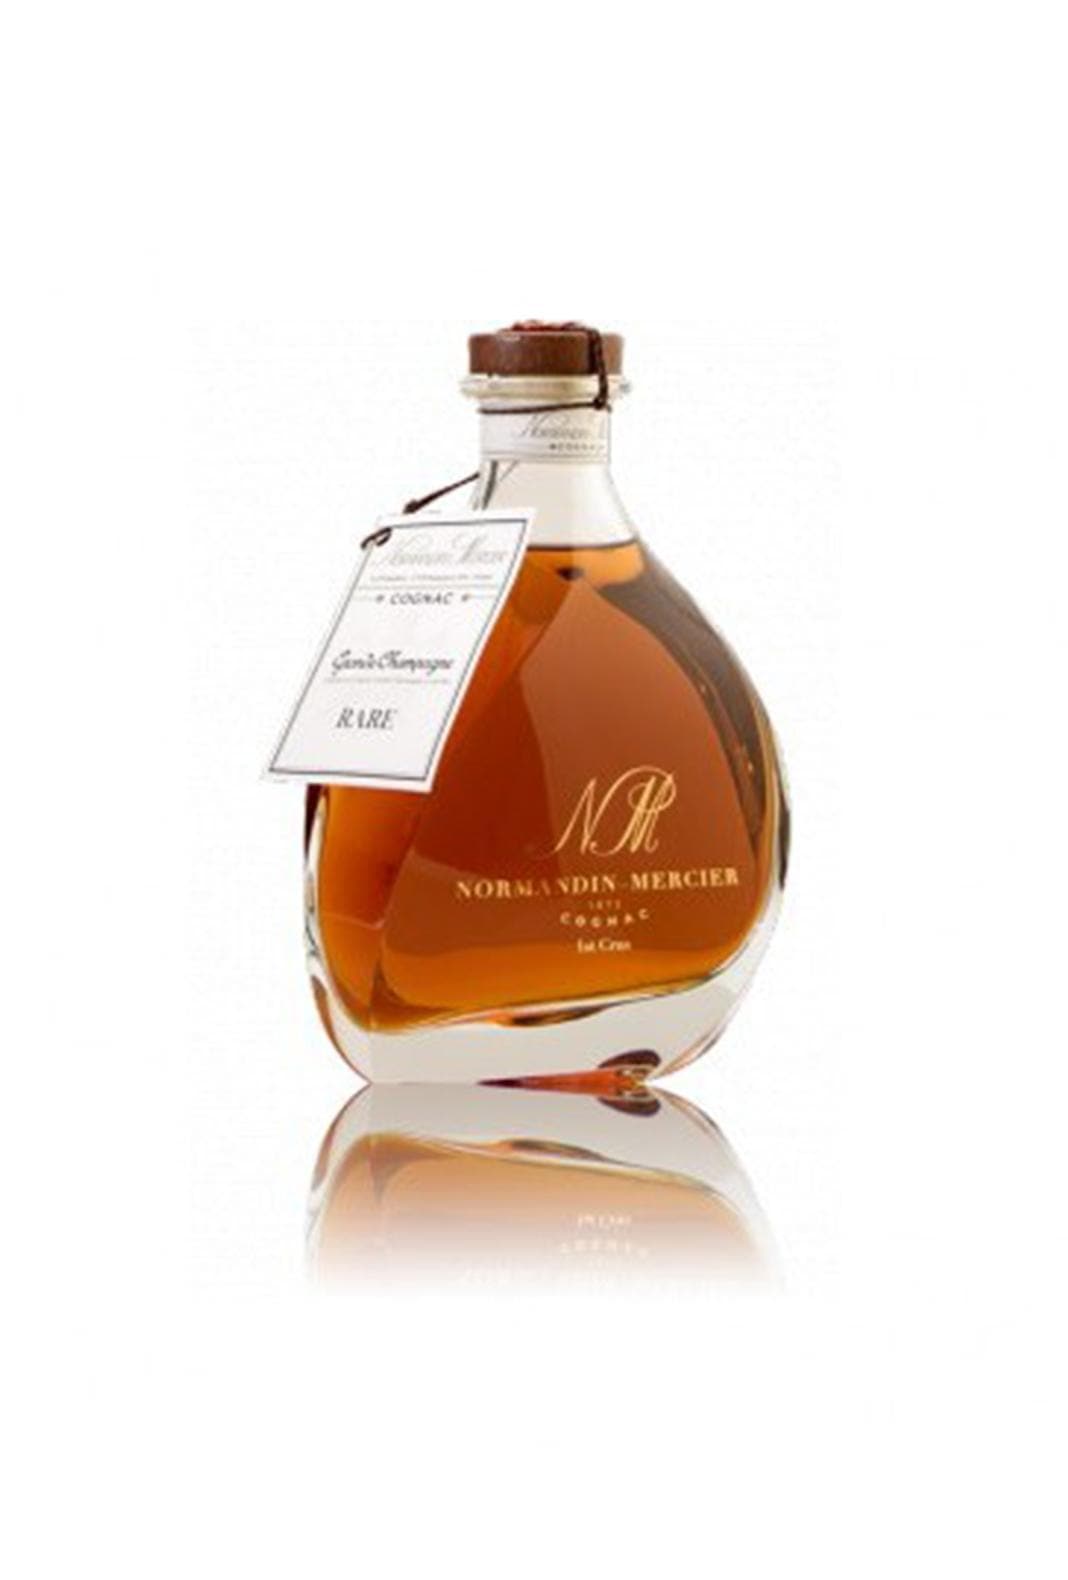 Normandin-Mercier Cognac 'Rare' 50 years Grand Champagne 42% 700ml CARAFE | Brandy | Shop online at Spirits of France